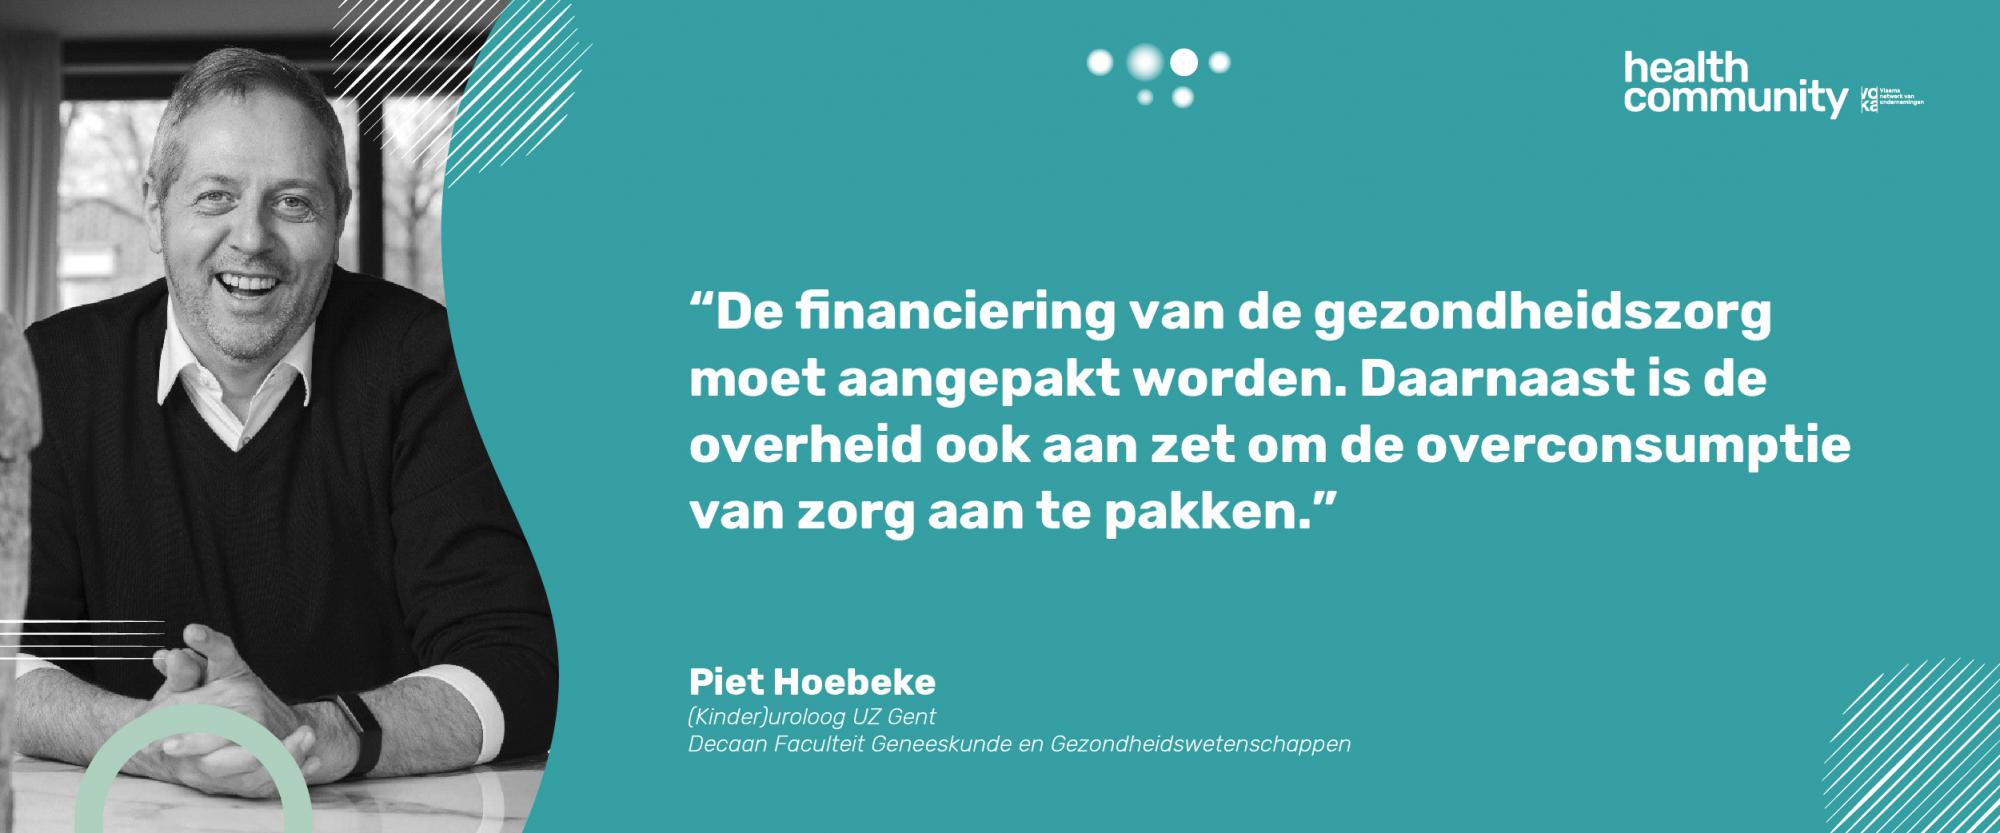 Piet Hoebeke